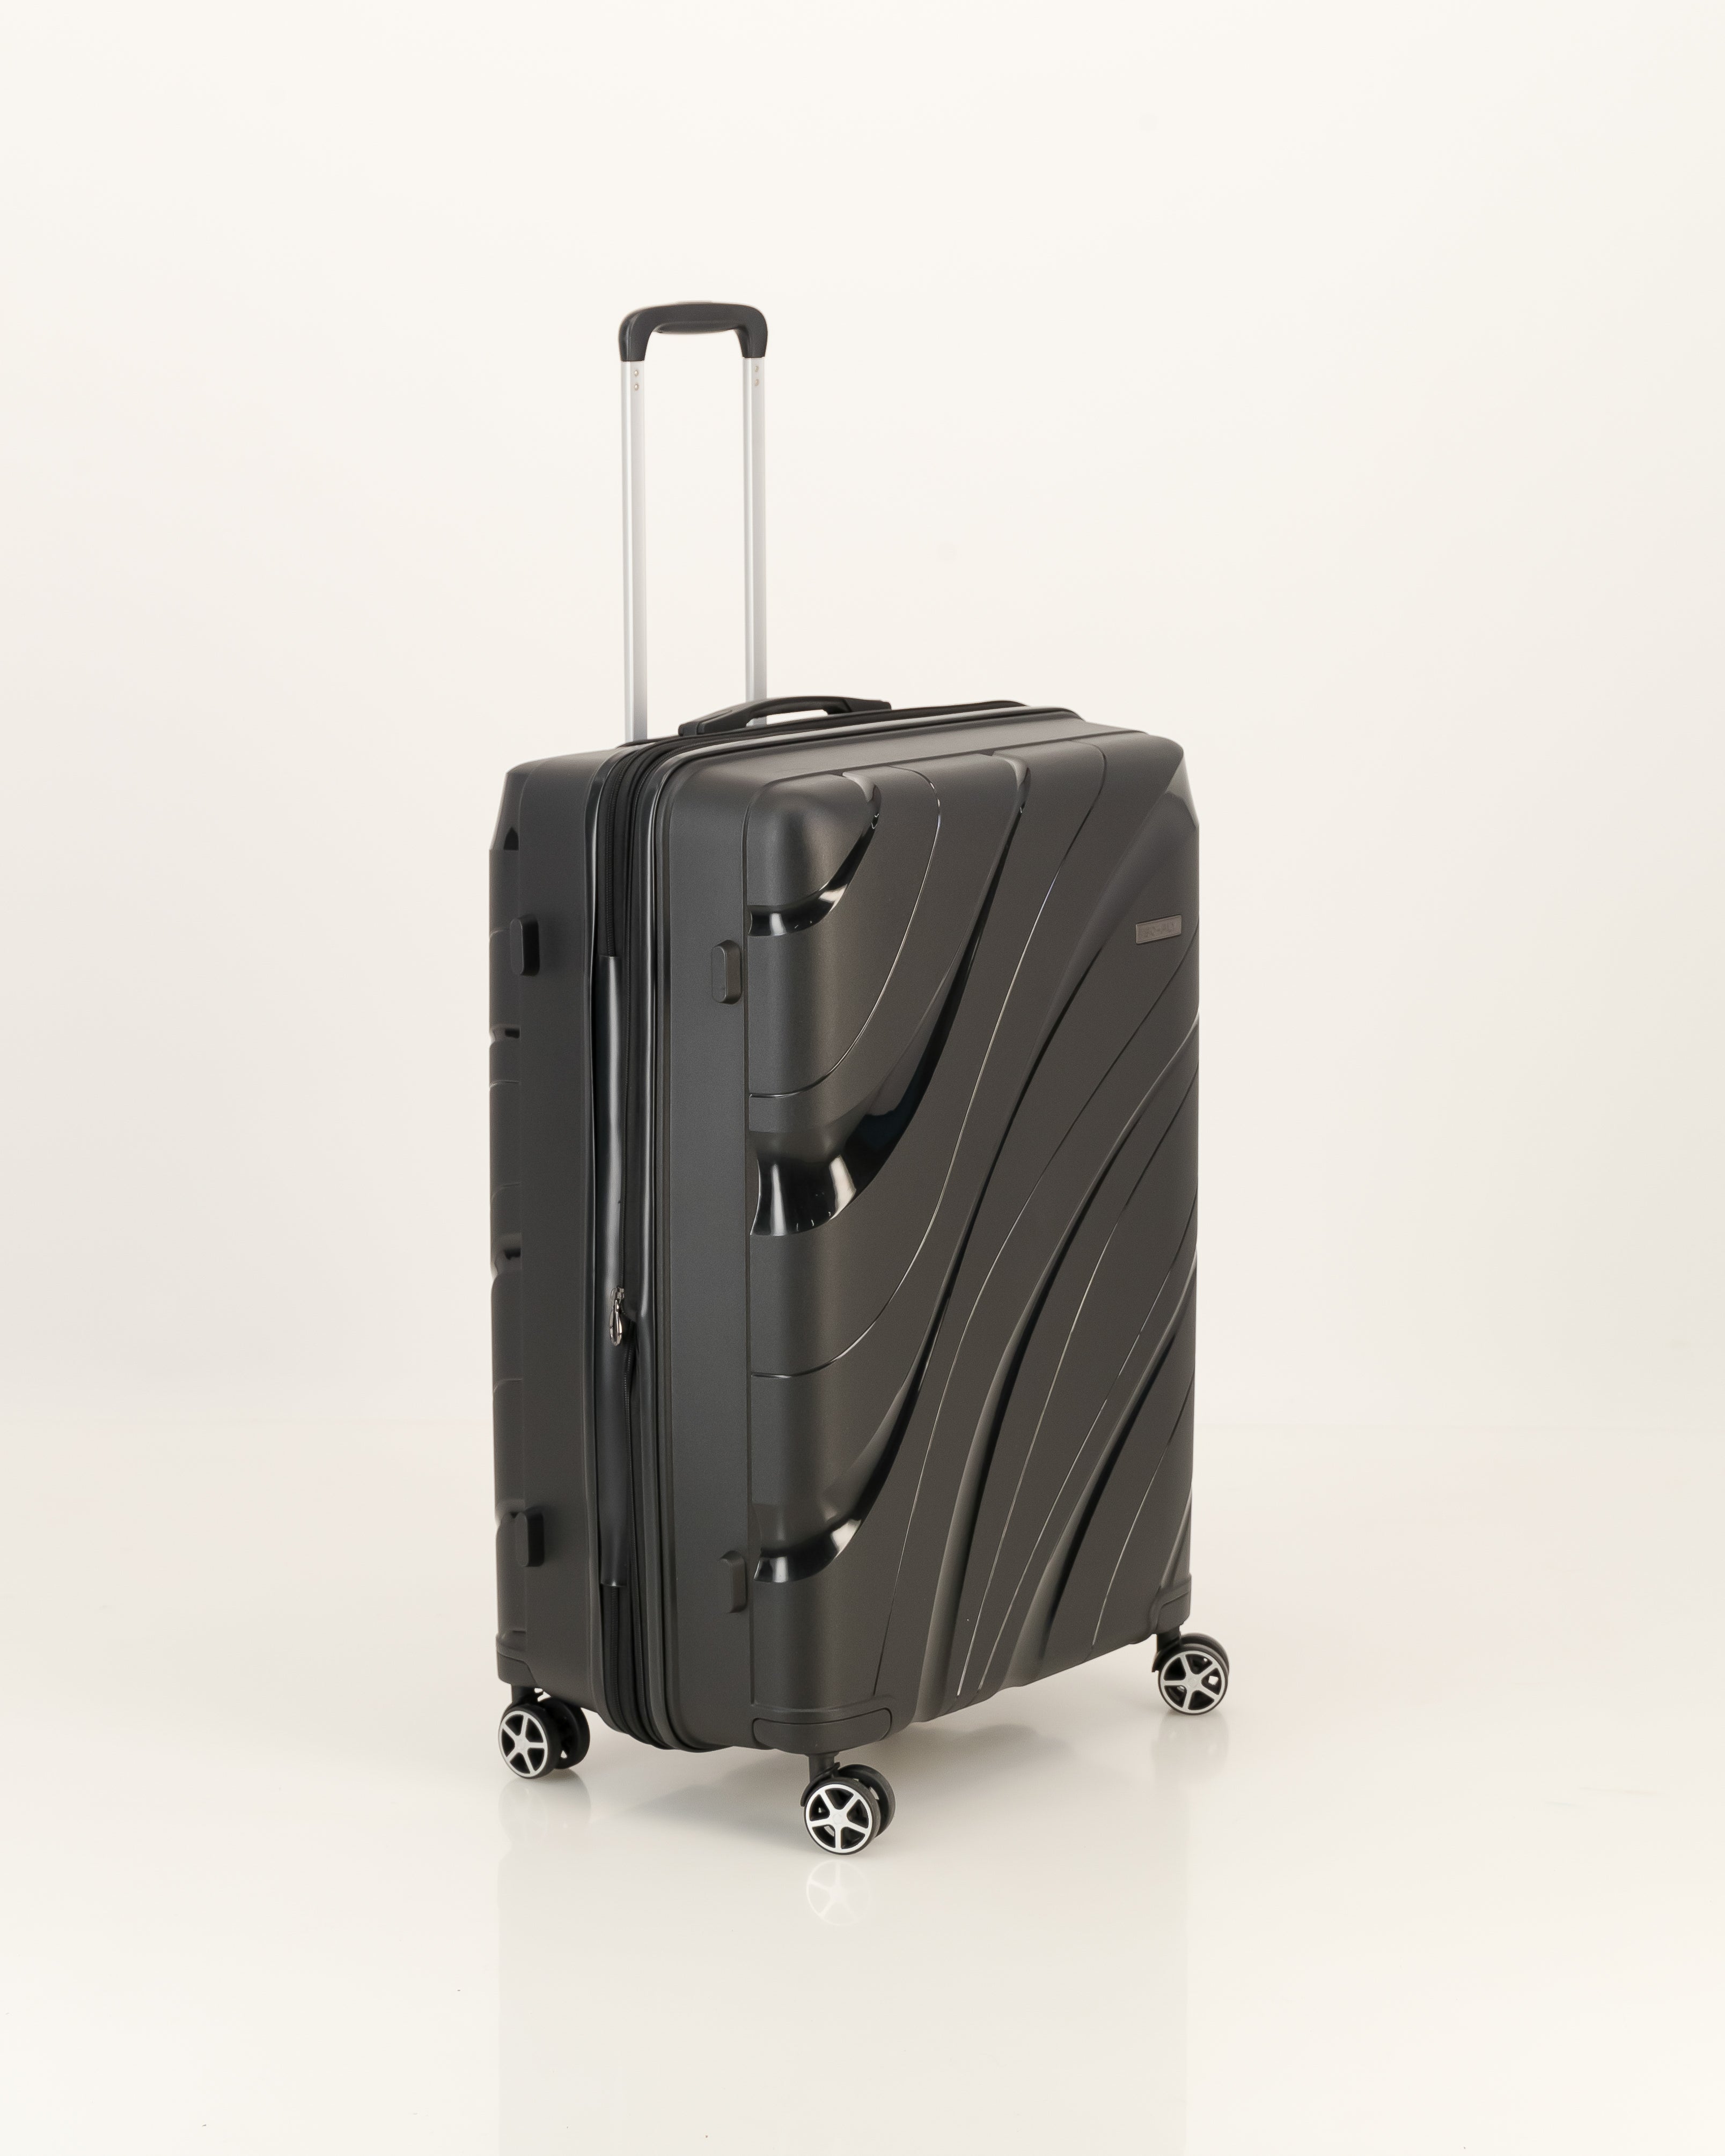 So-Fly Orbit 65cm Spinner Luggage